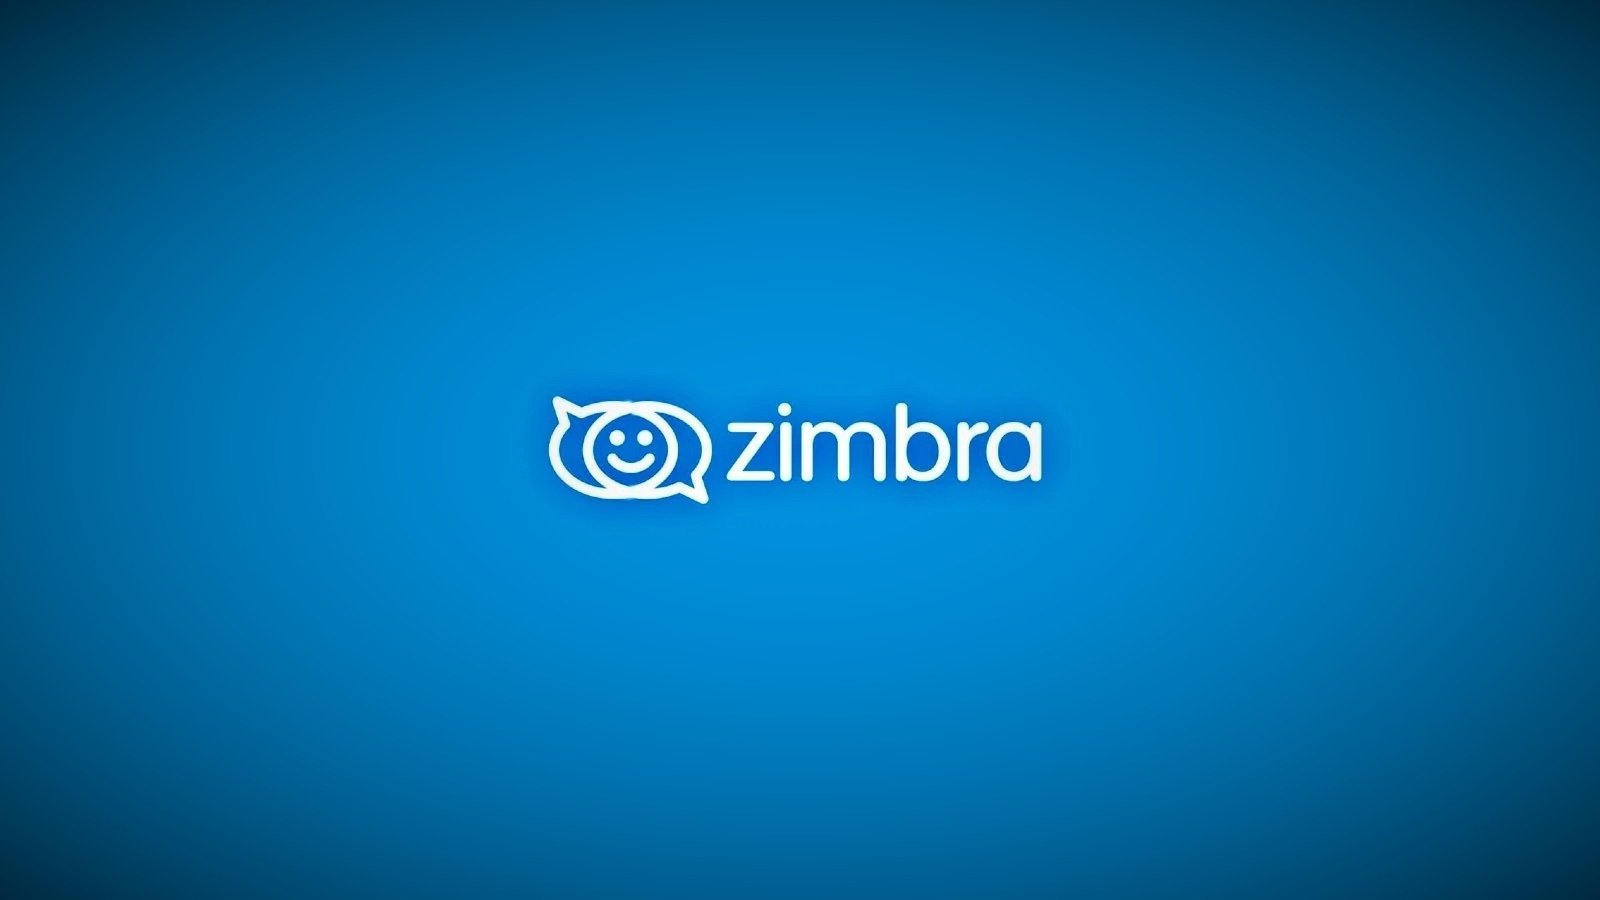 Google: Hackers exploited Zimbra zero-day in attacks on govt org